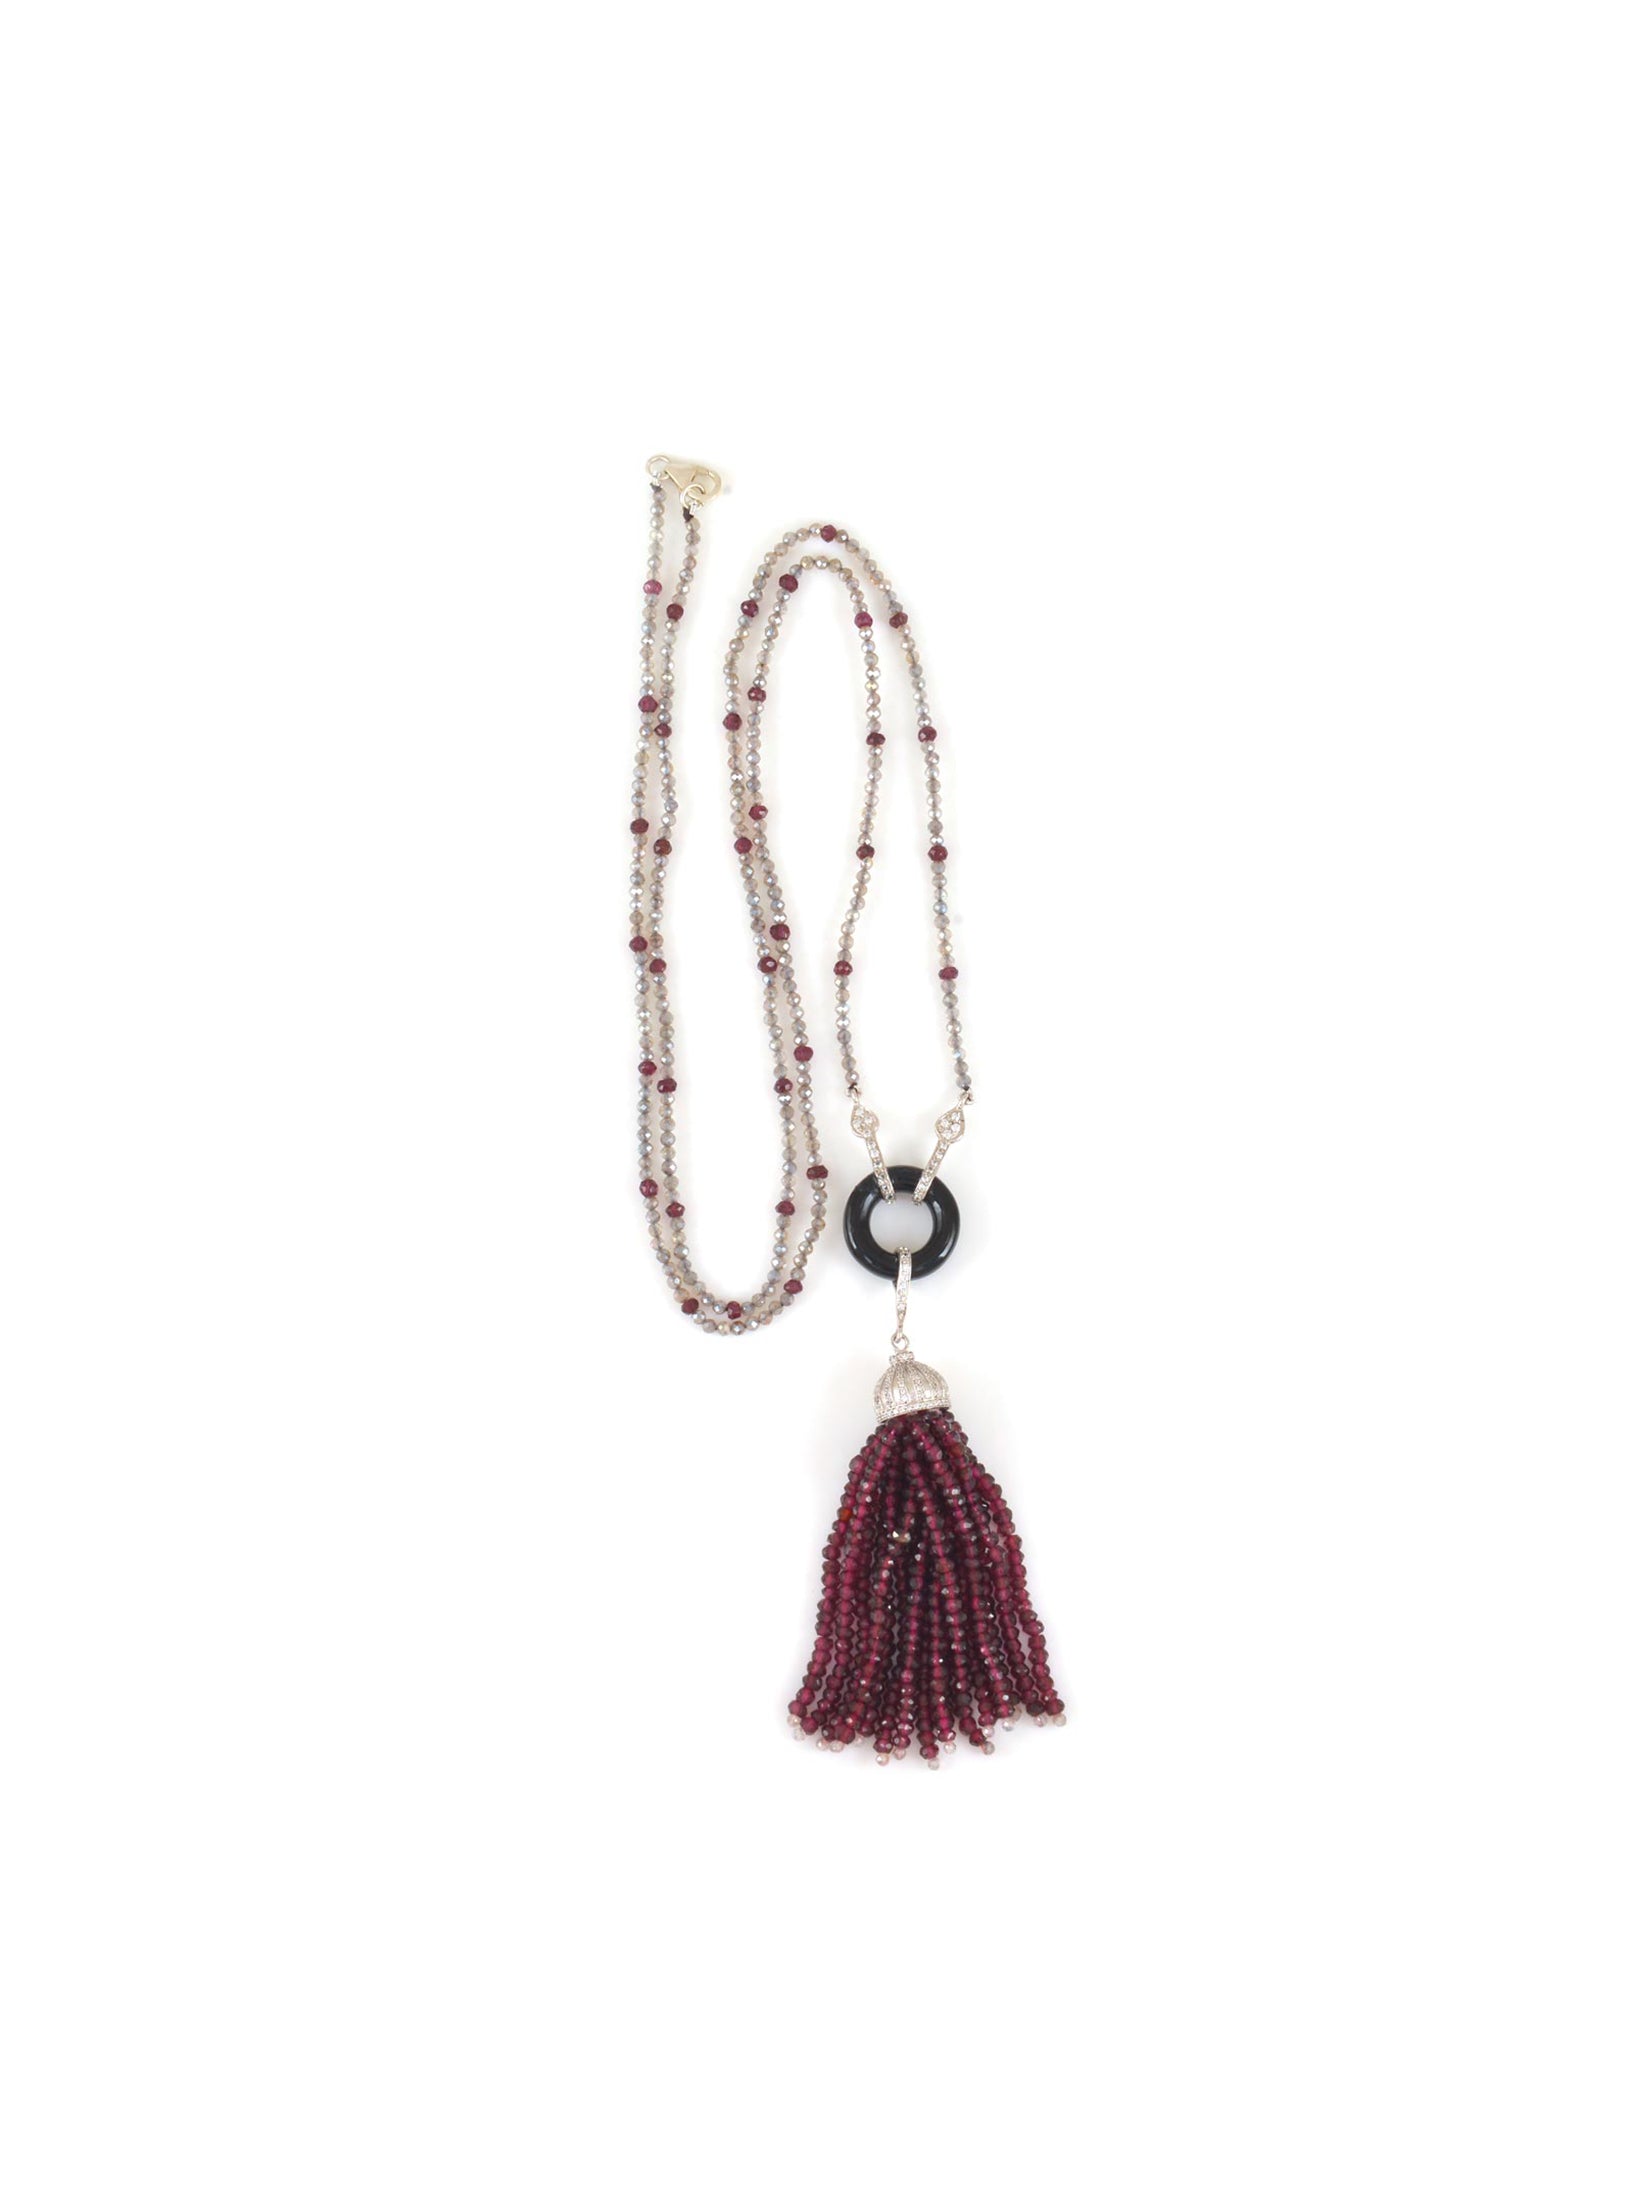 Onyx & Garnet Tassel Necklace